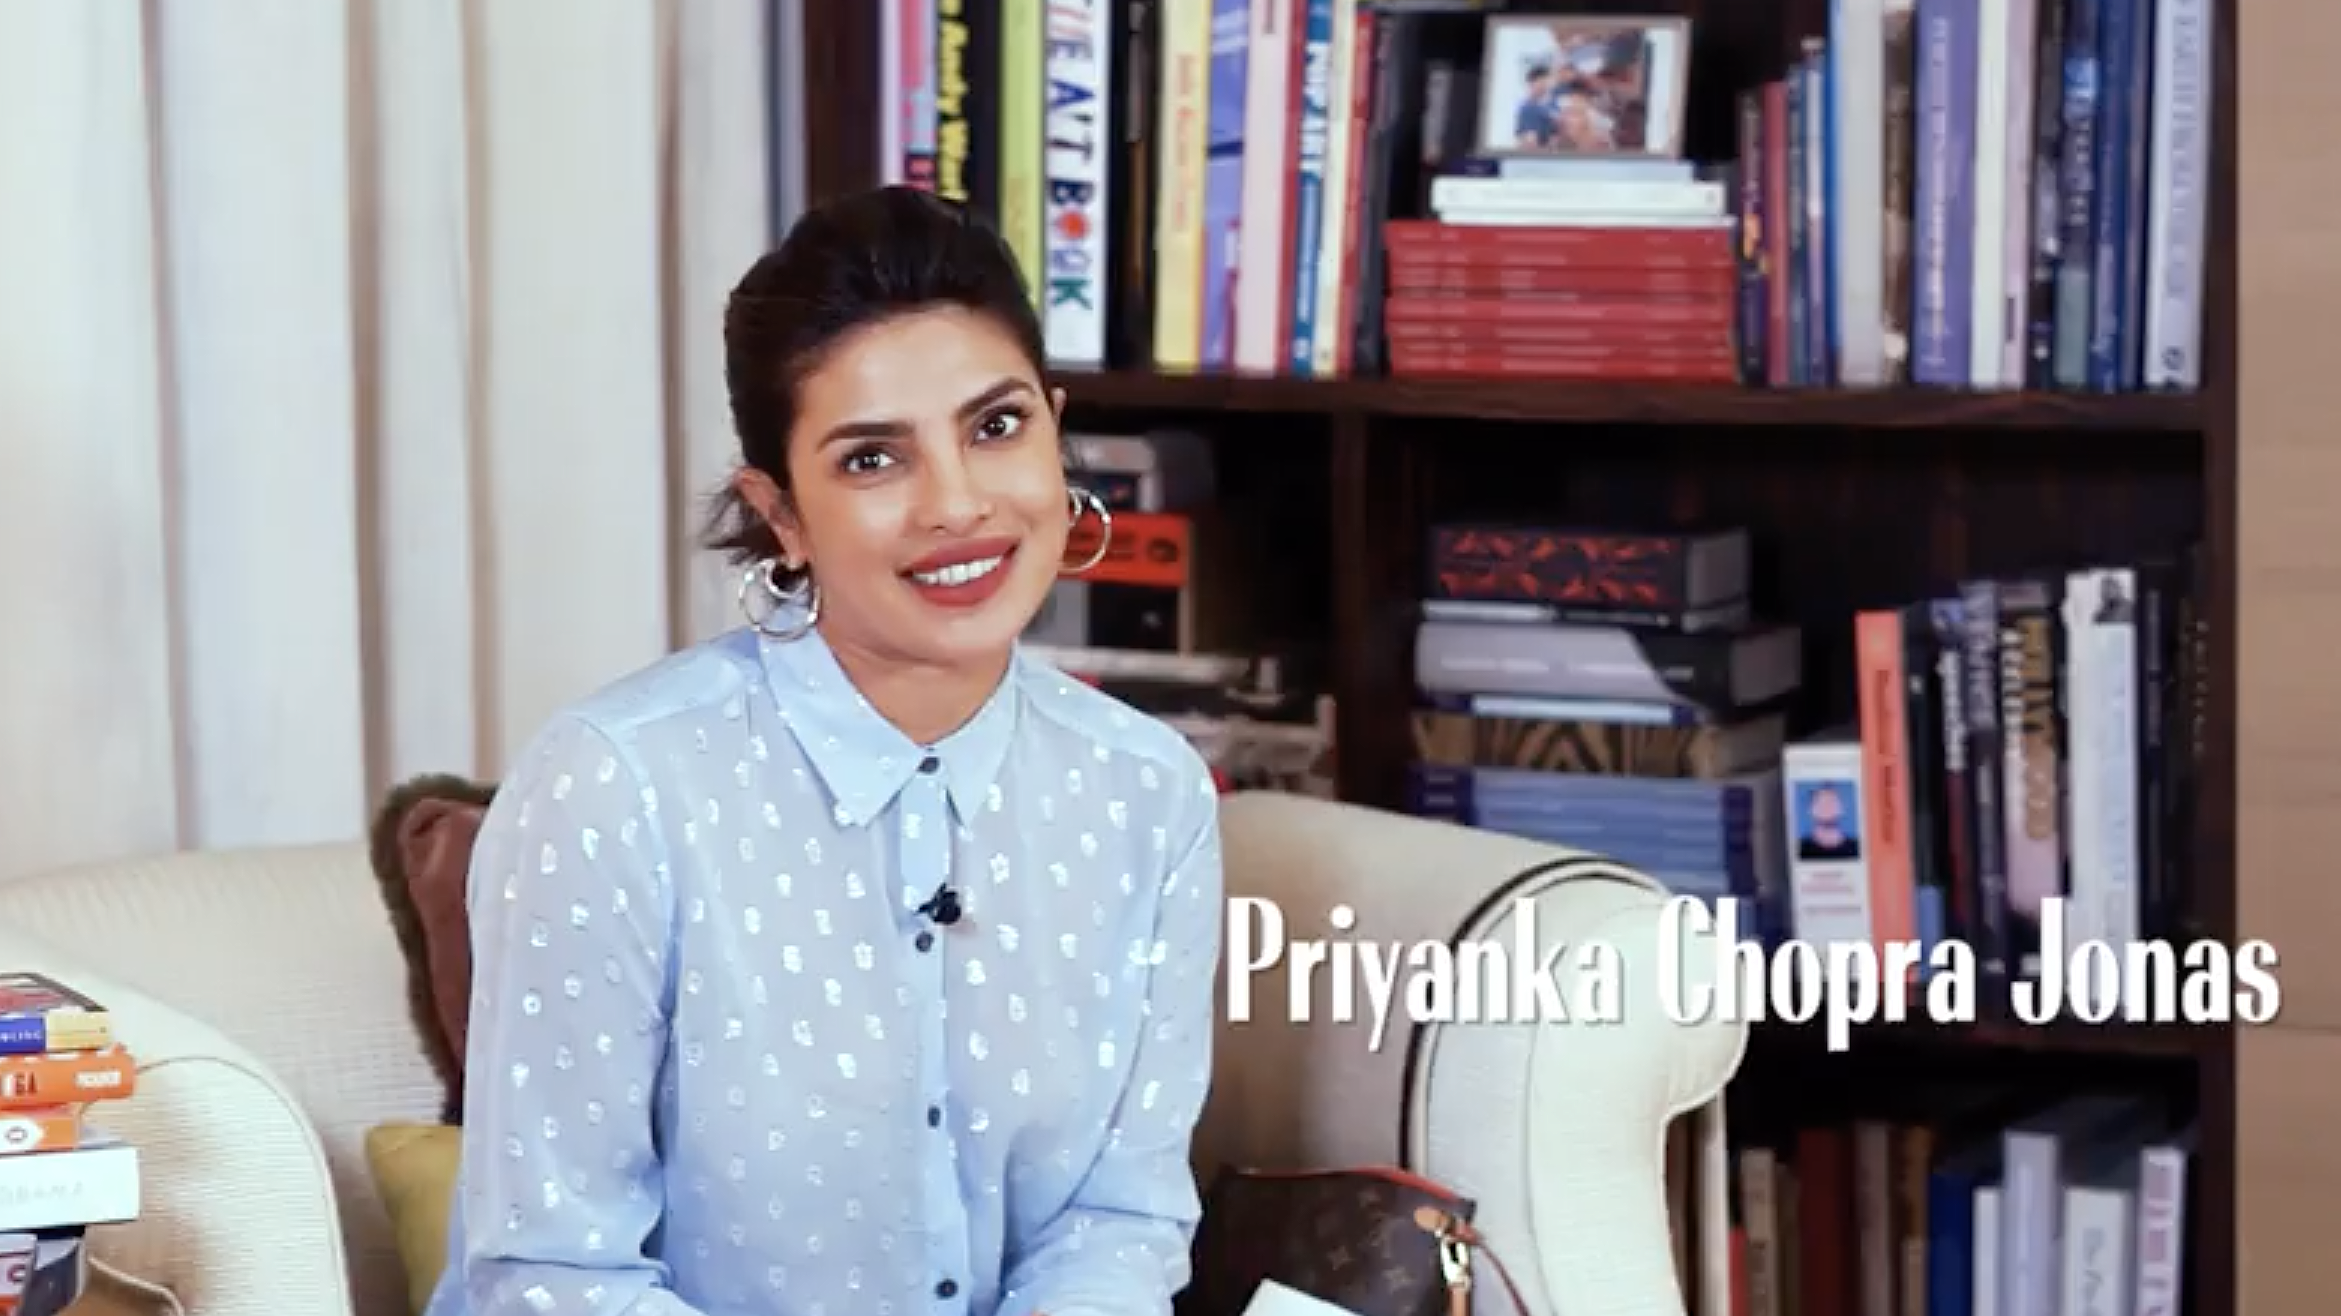 Priyanka Chopra Jonas Reveals Her Favorite Books in MC's 'Shelf Portrait'  Series | Marie Claire